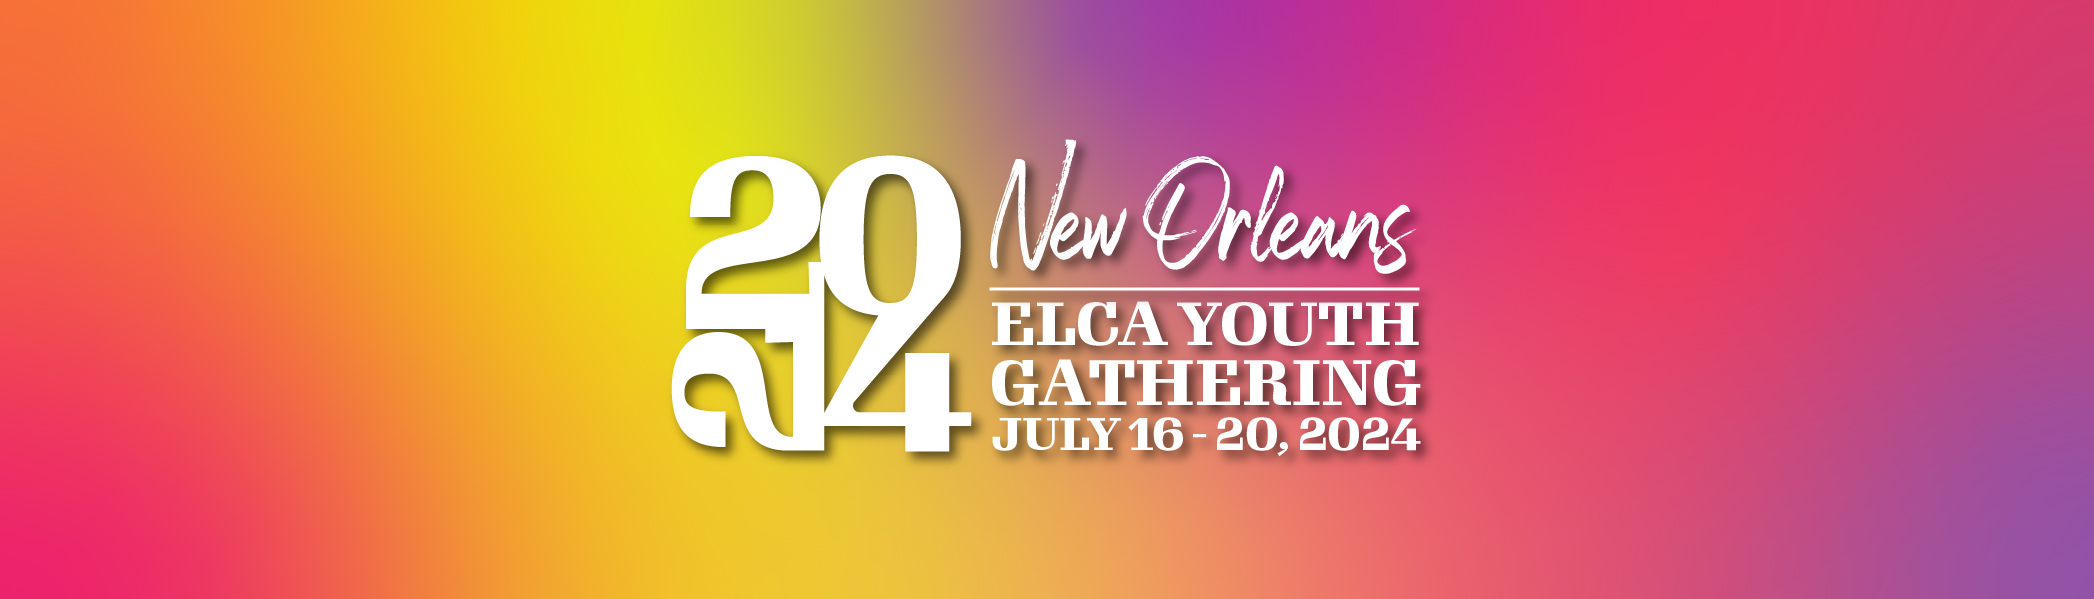 ELCA Youth Gathering 2024 City Challenge